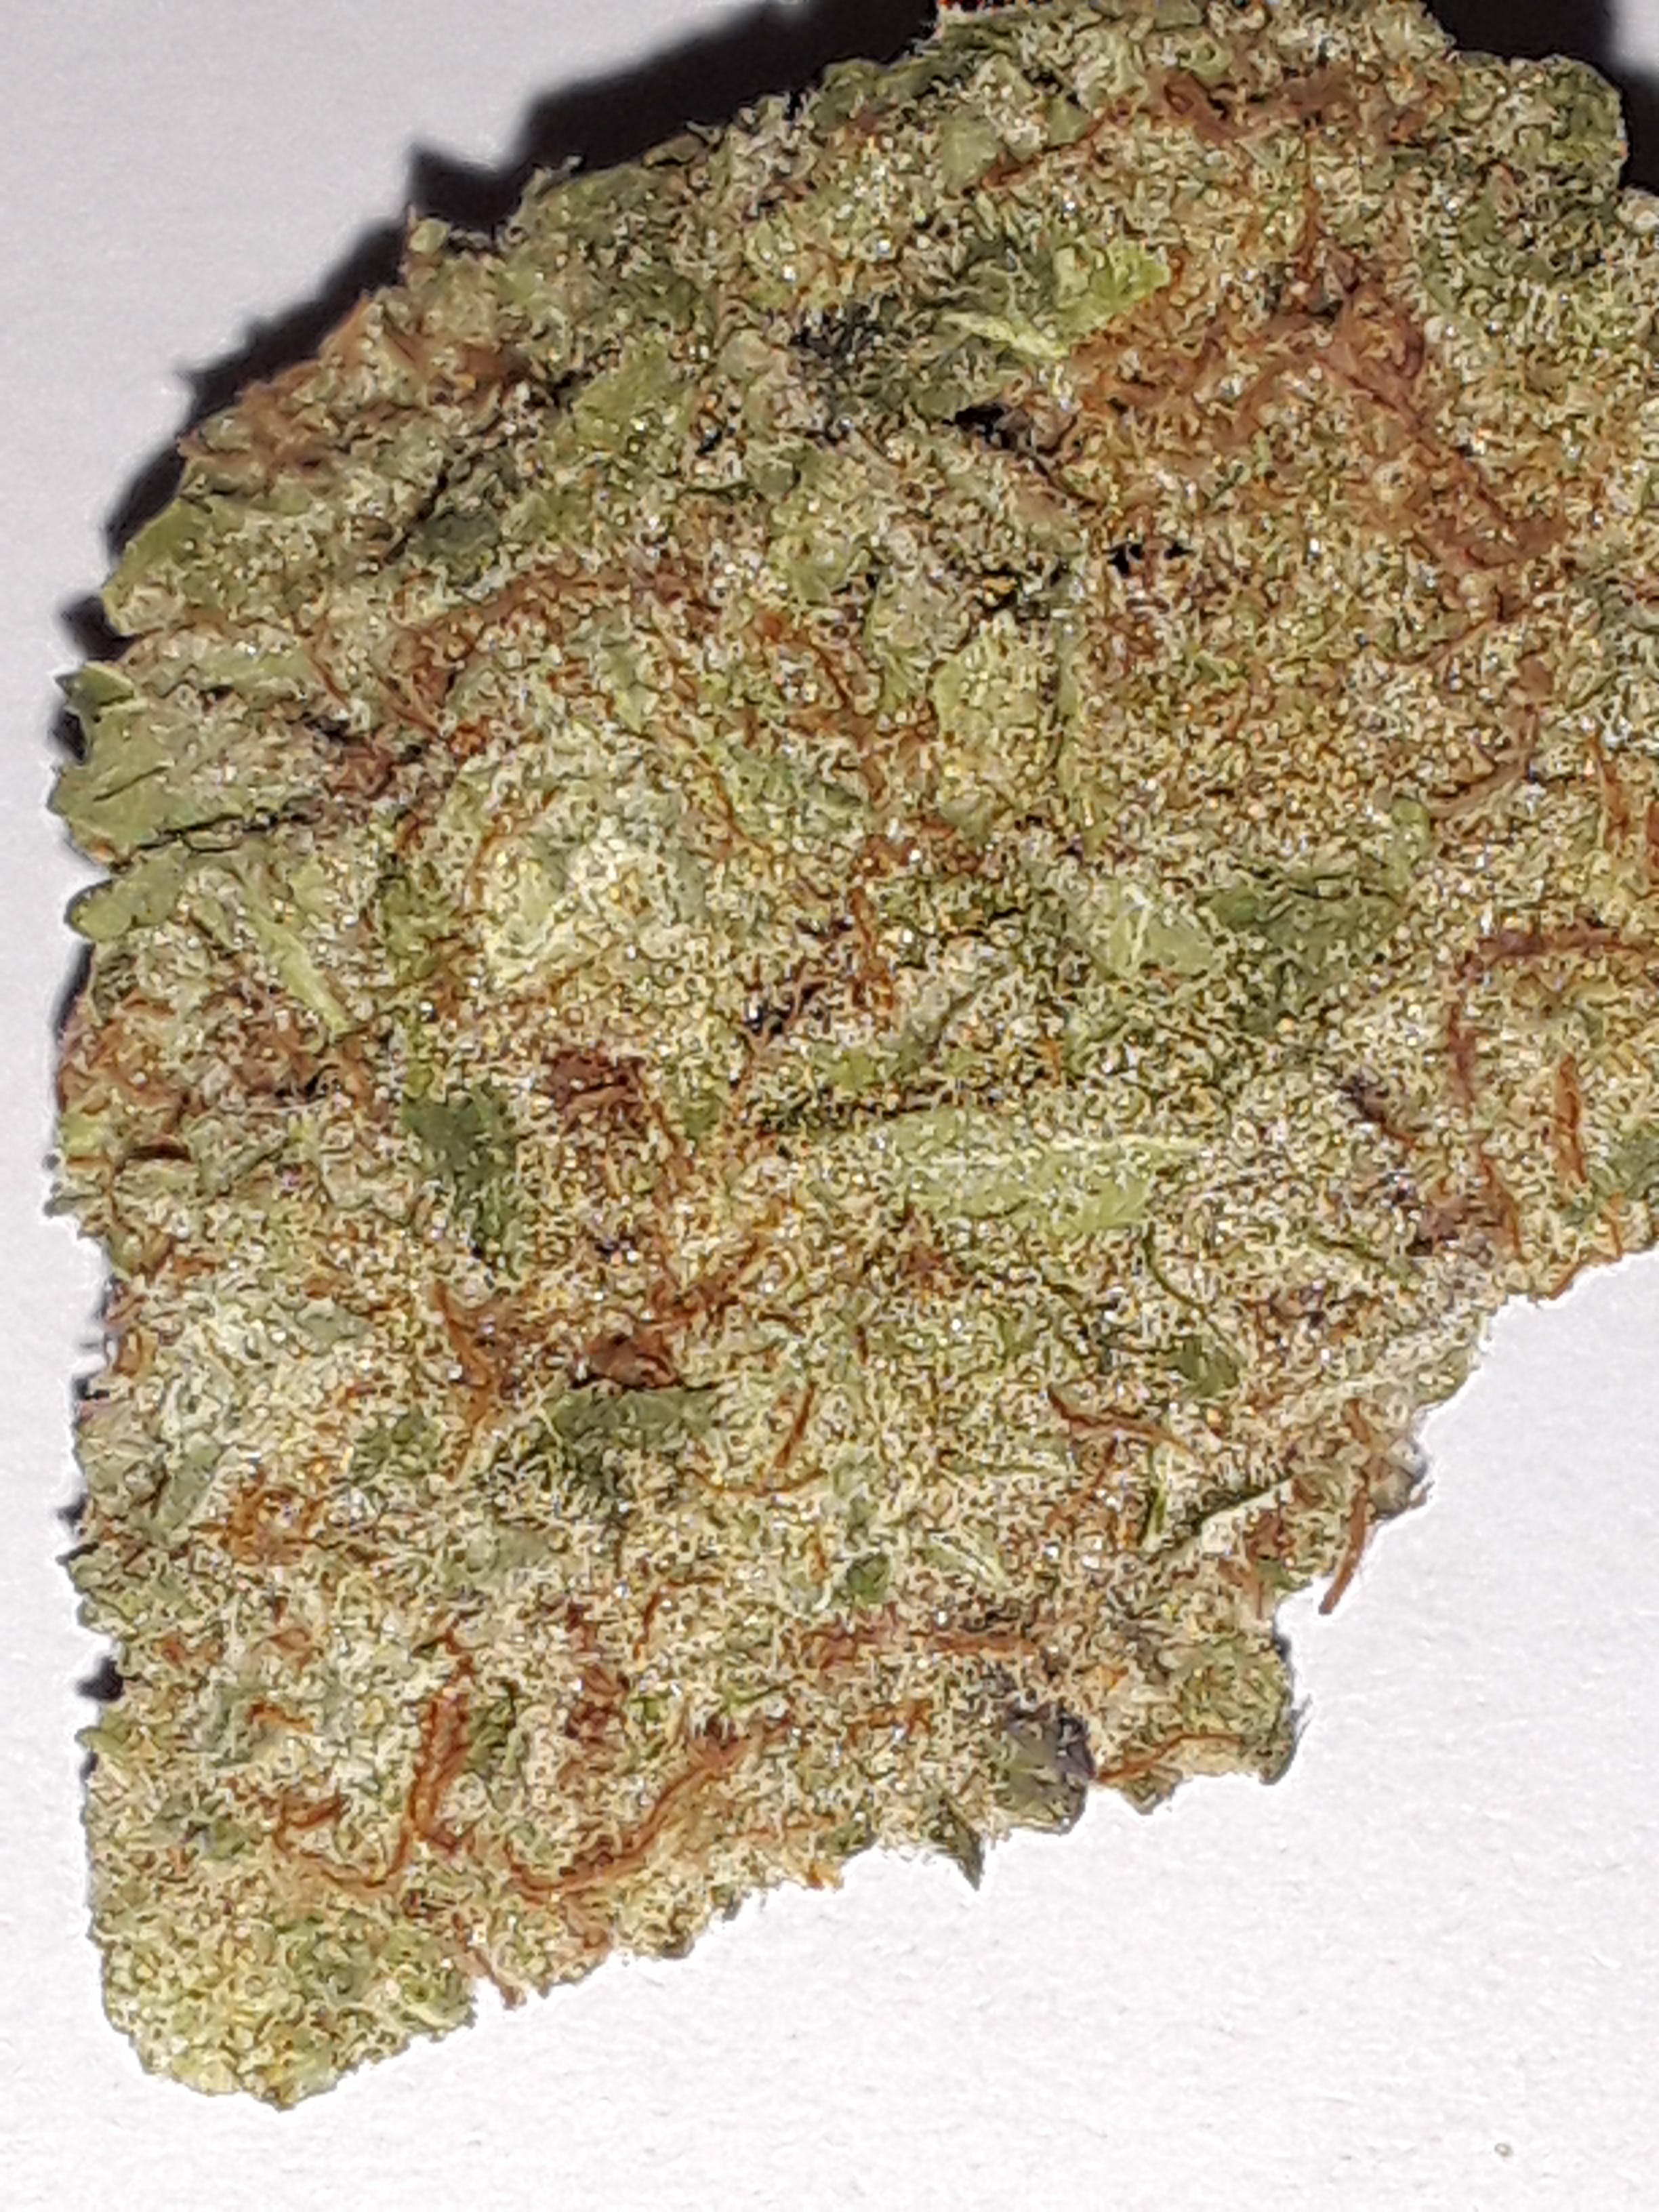 marijuana-dispensaries-la-420-in-los-angeles-gorilla-glue-2312